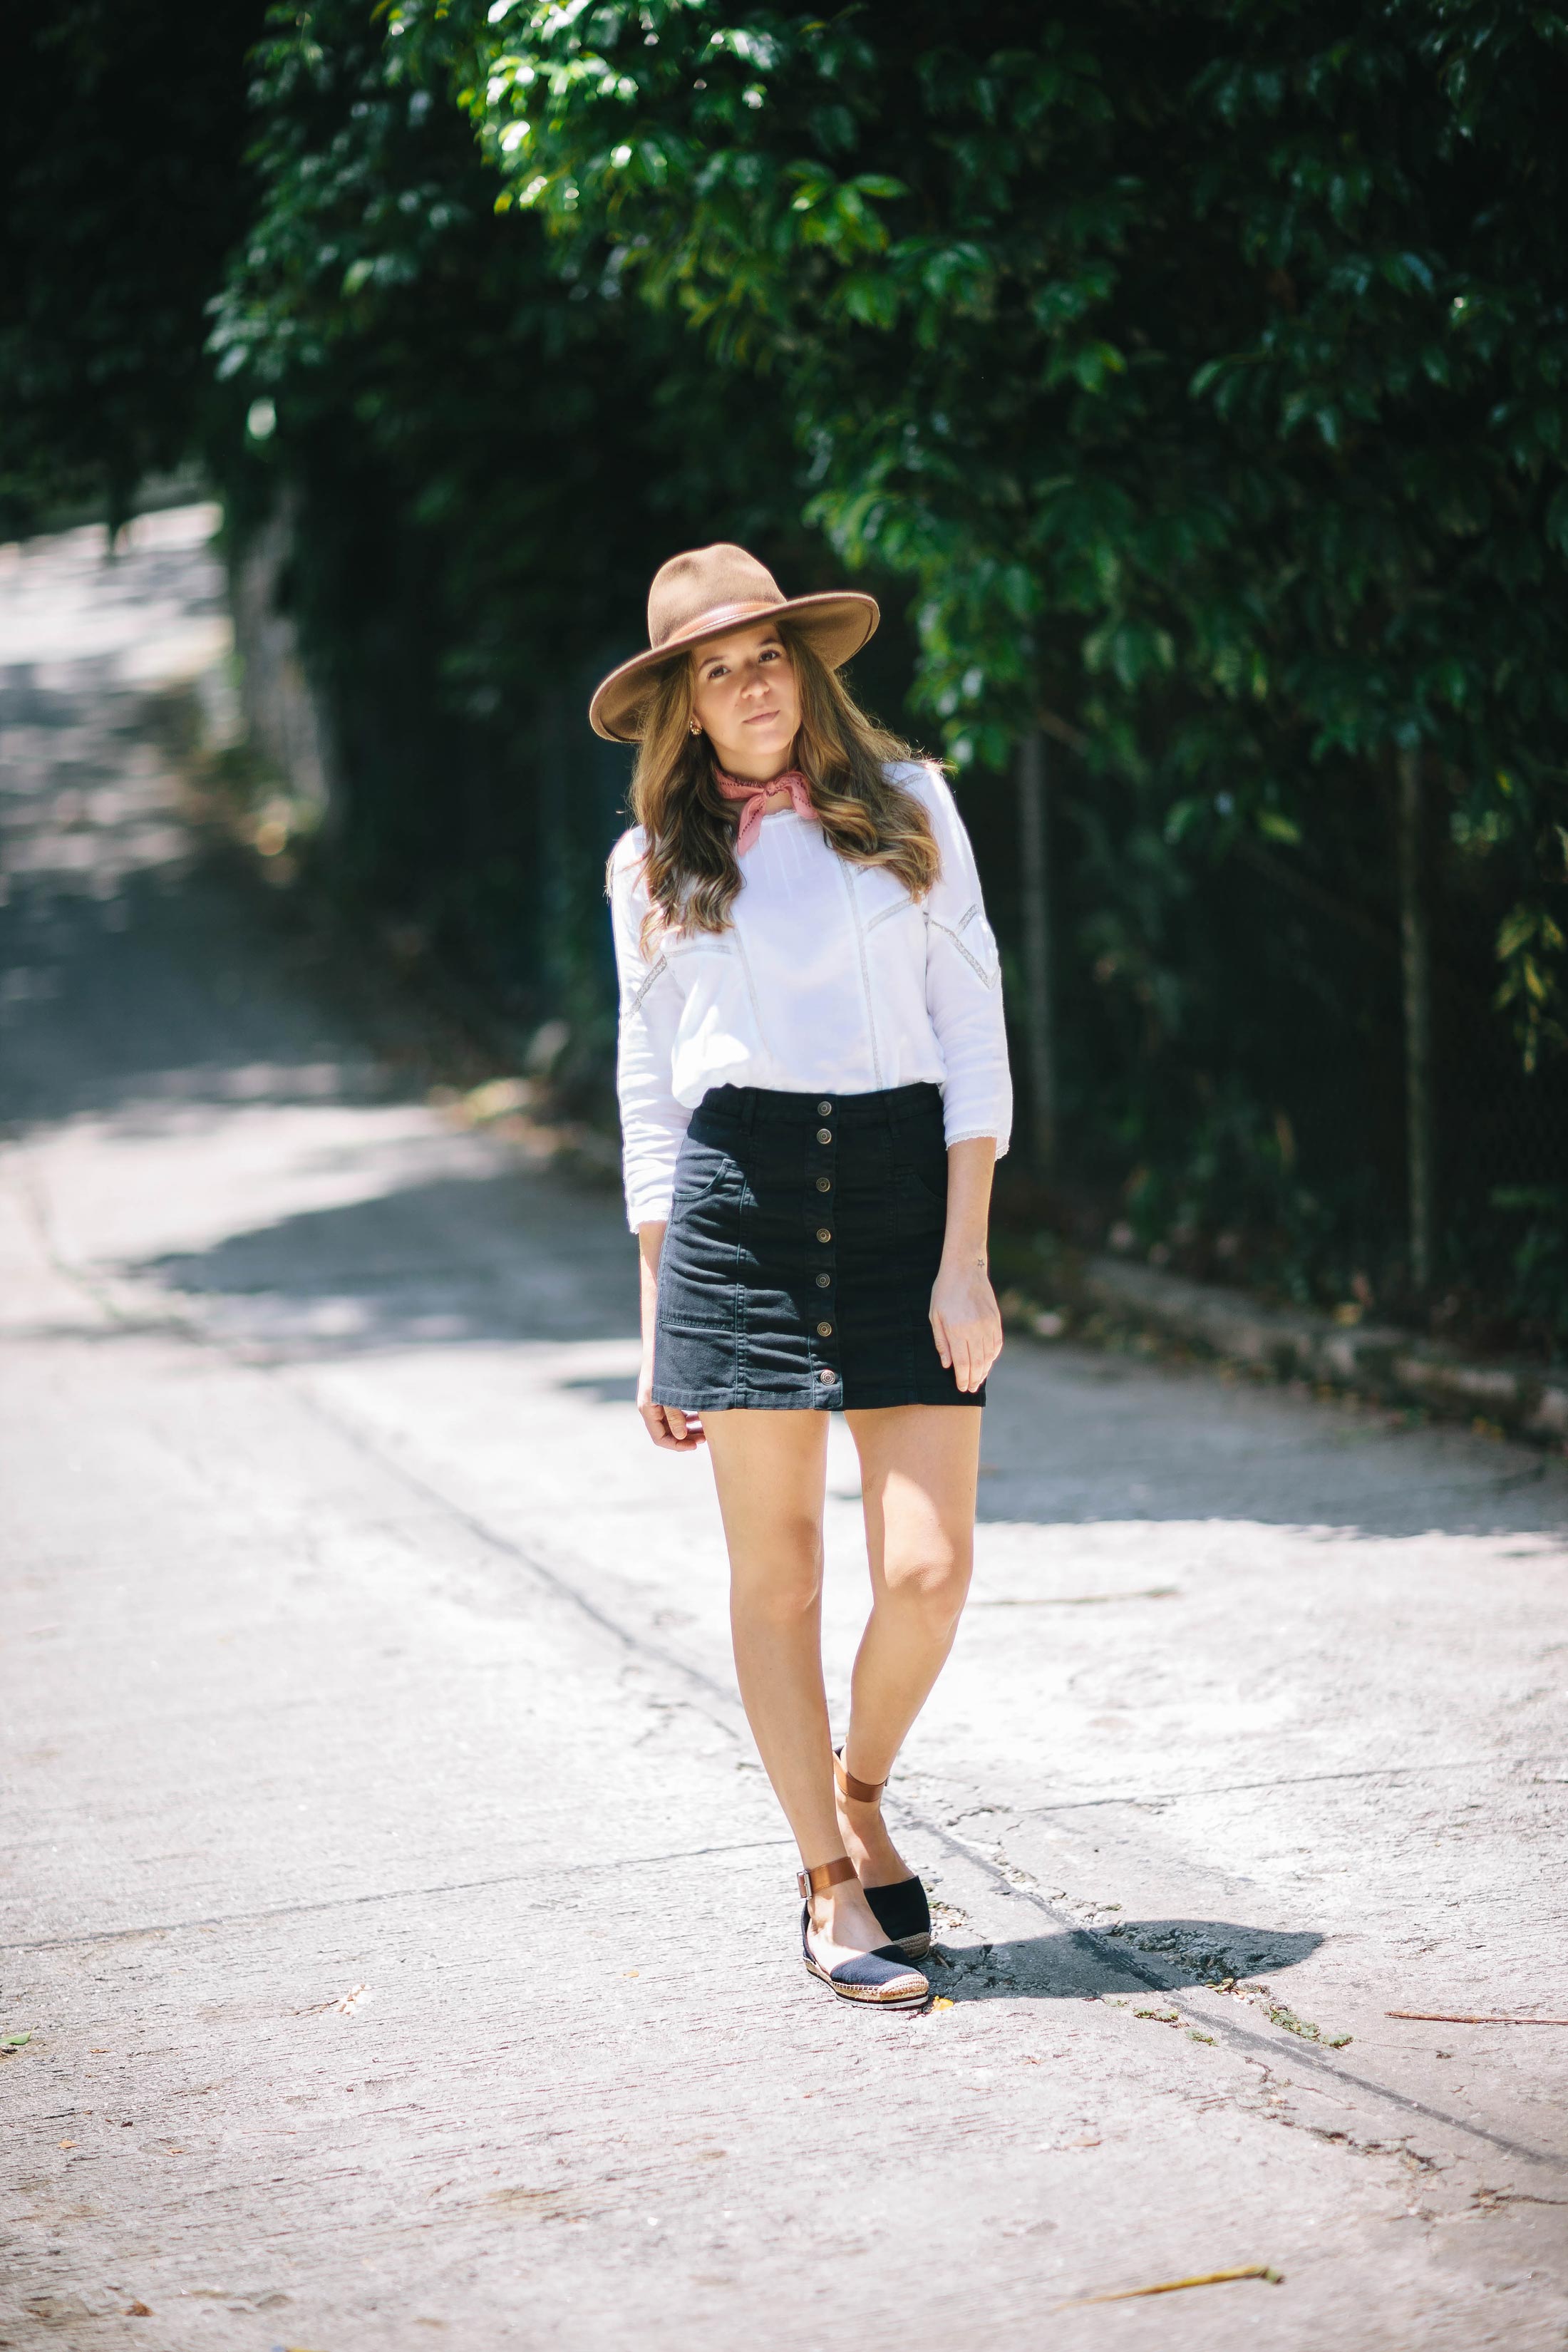 Blogger summer kerchief outfit idea